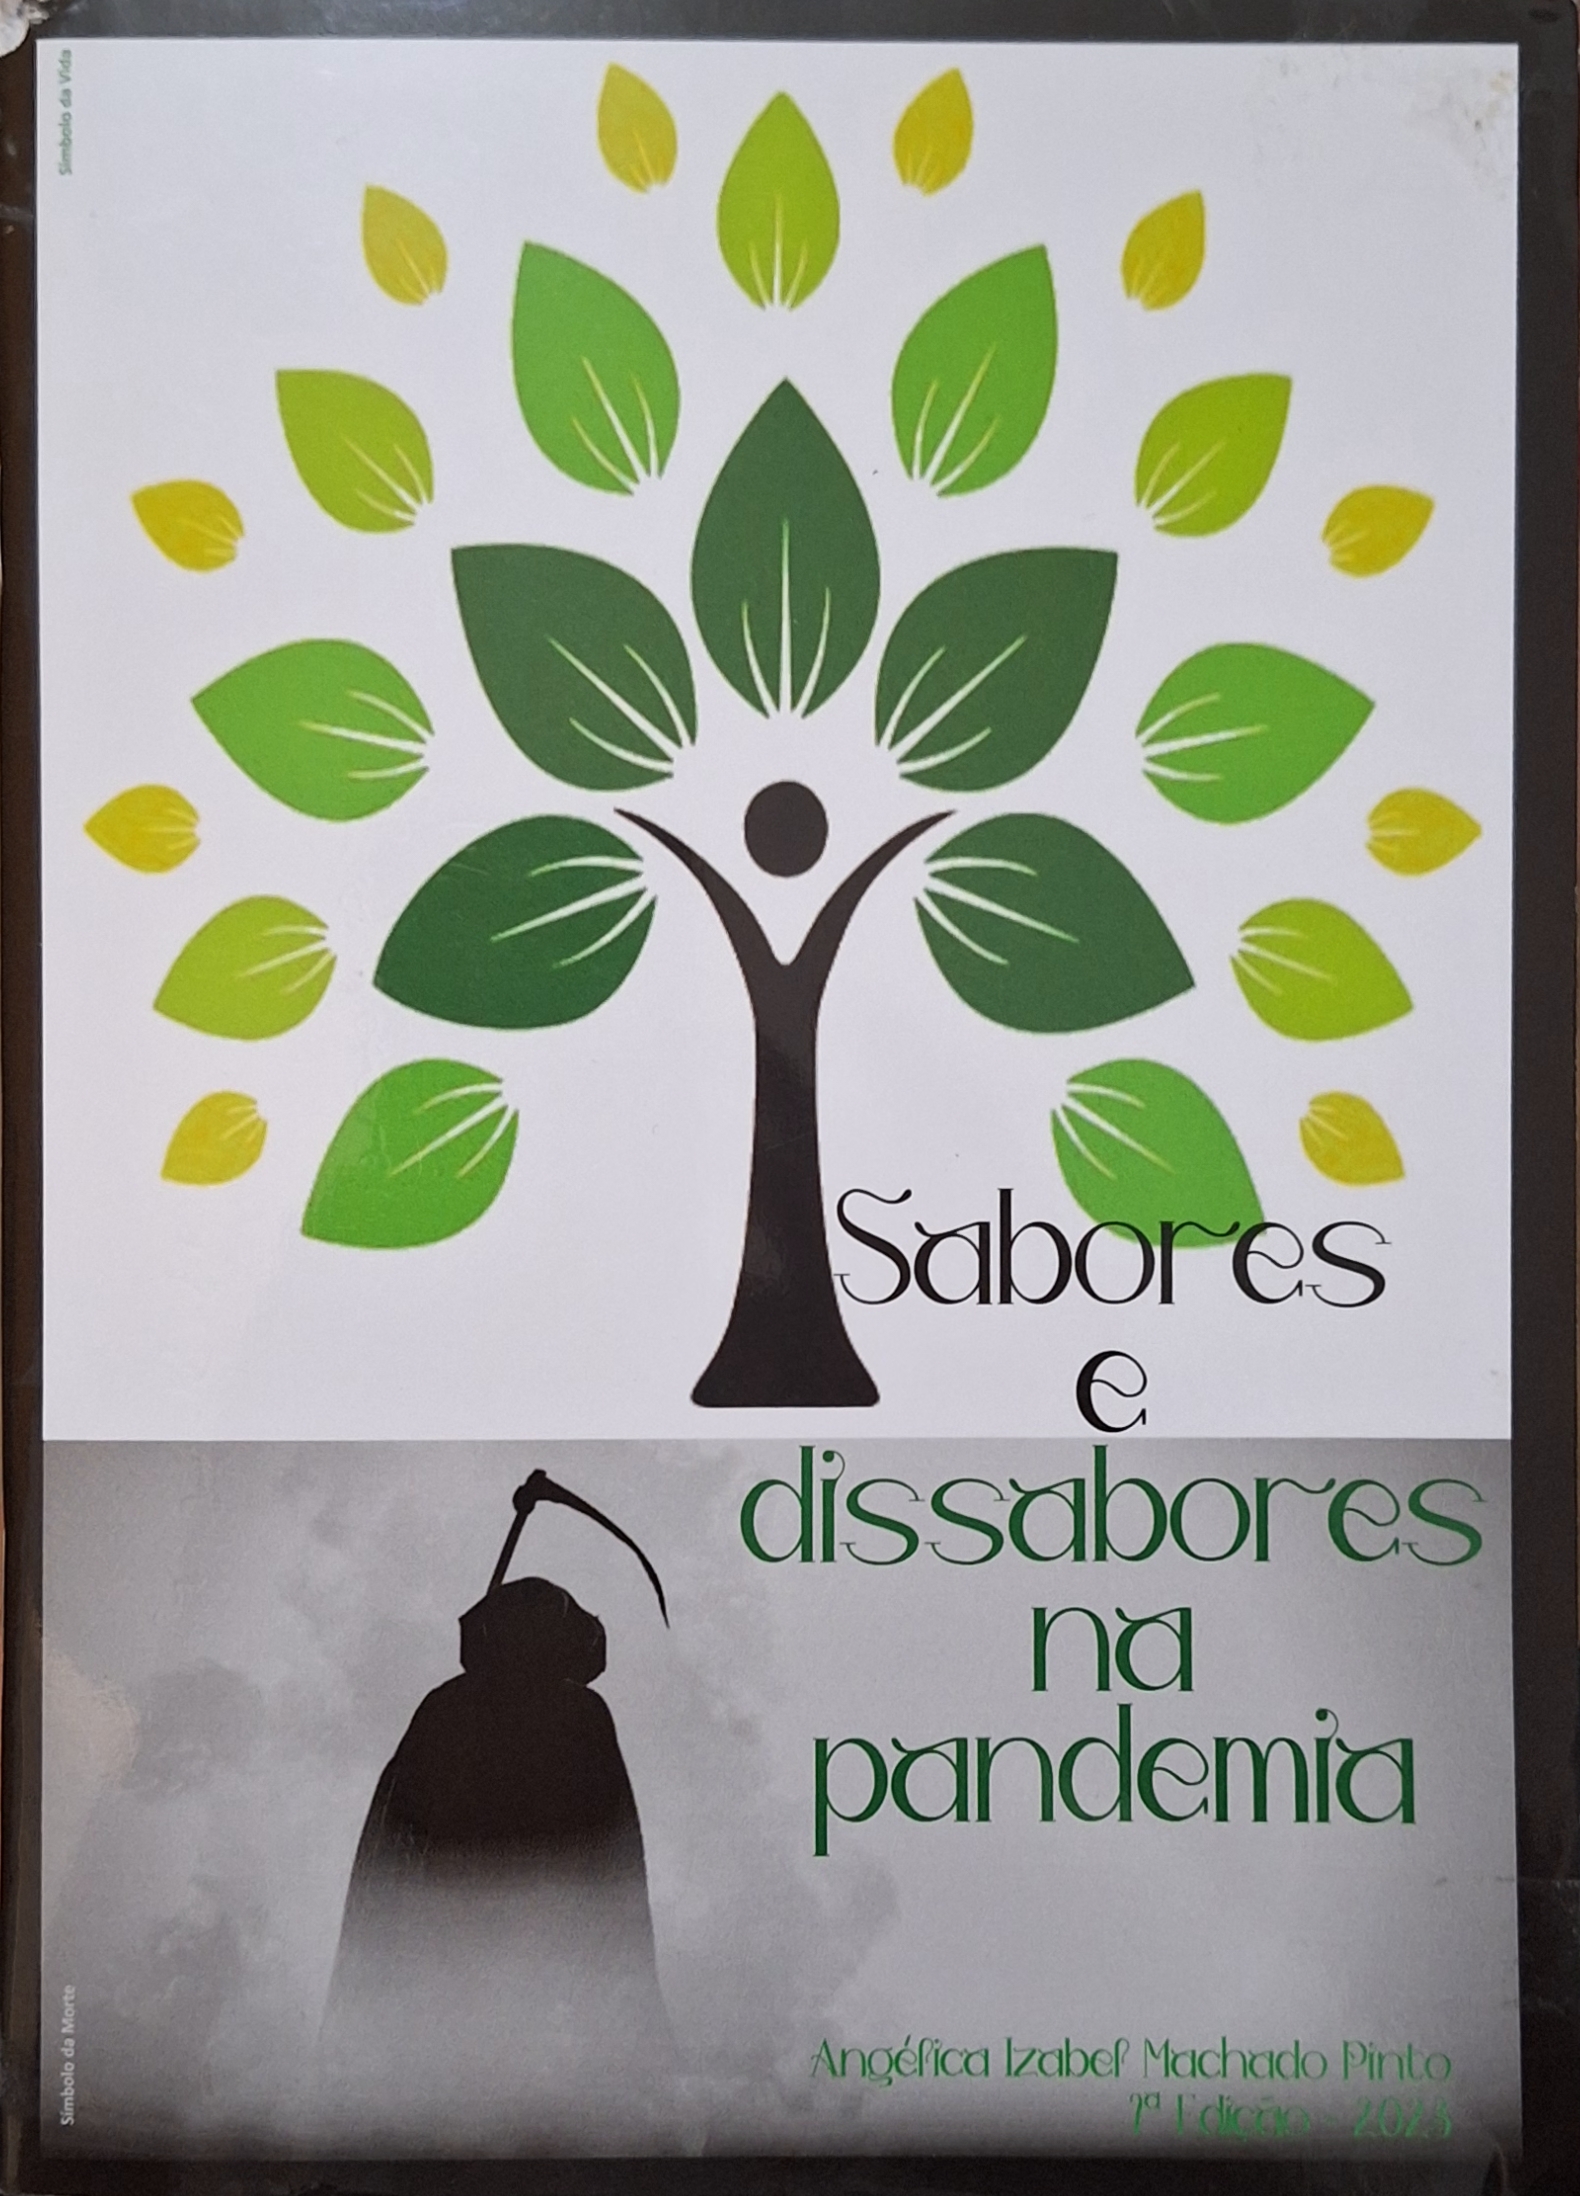 Capa do livro Sabores e dissabores da pandemia,  de Angélica Izabel Machado Pinto, pela Editora Uiclap.